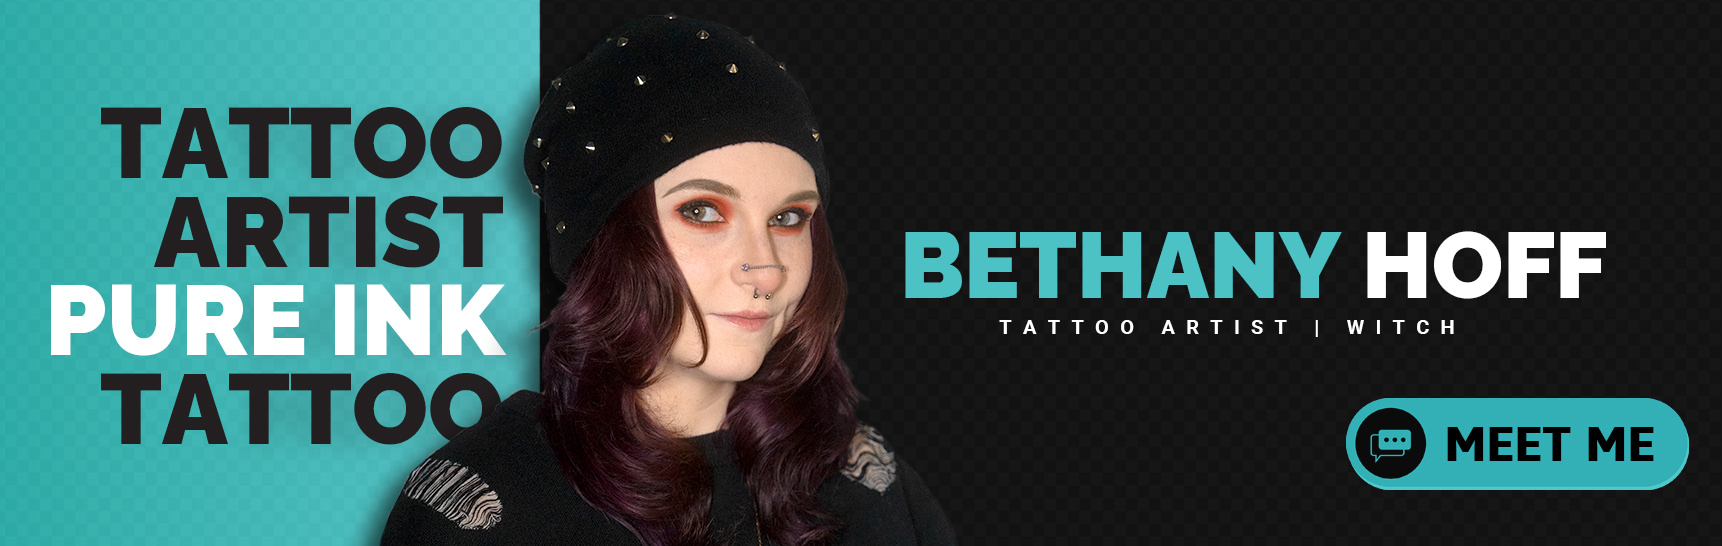 Bethany Hoff - Tattoo Artist - Witch - Pure Ink Tattoo Studio NJ